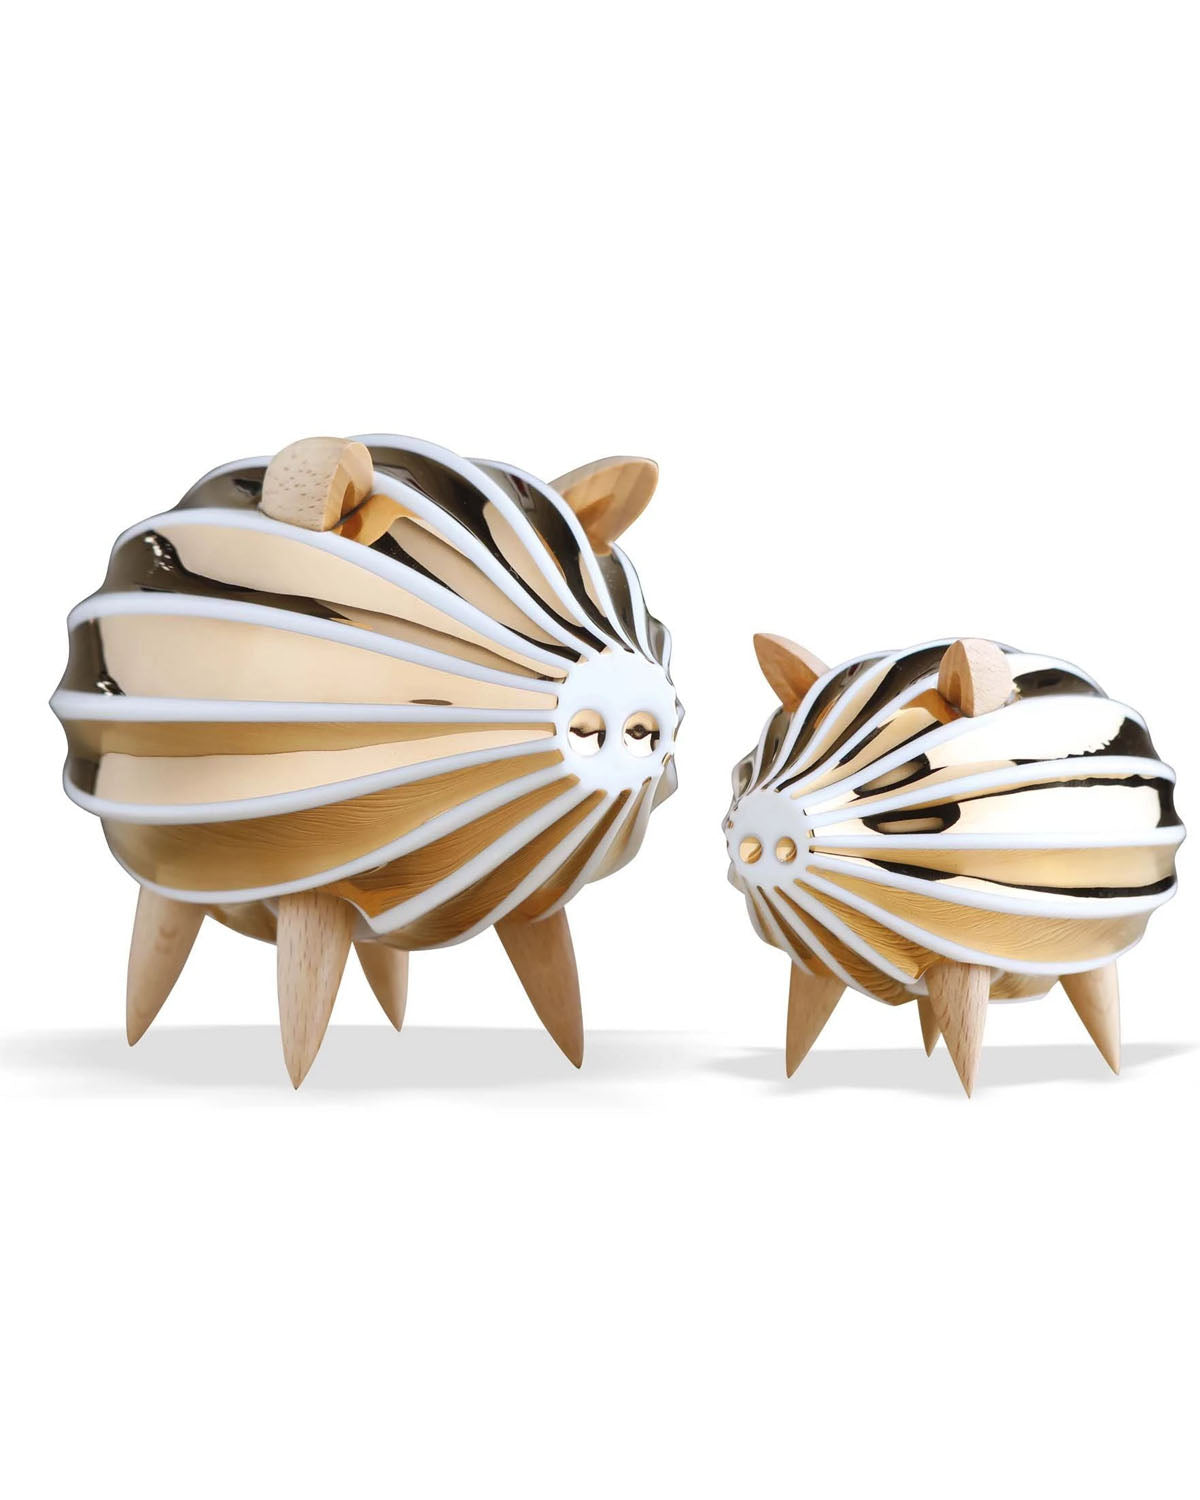 Ceramic Golden Piggy Bank